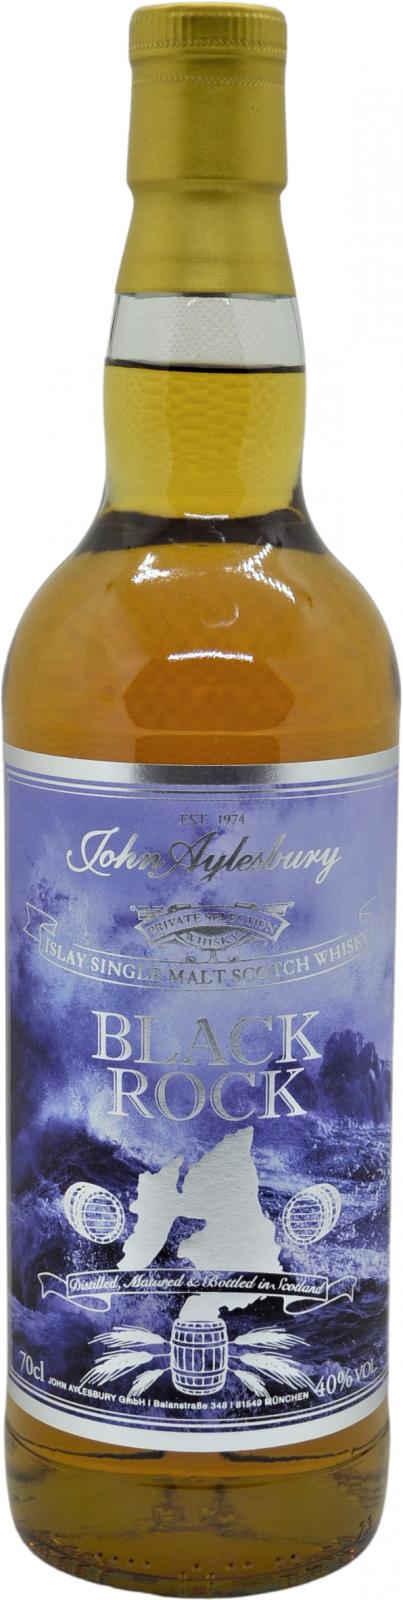 Islay Single Malt Scotch Whisky Black Rock JAy Private Selection 40% 700ml